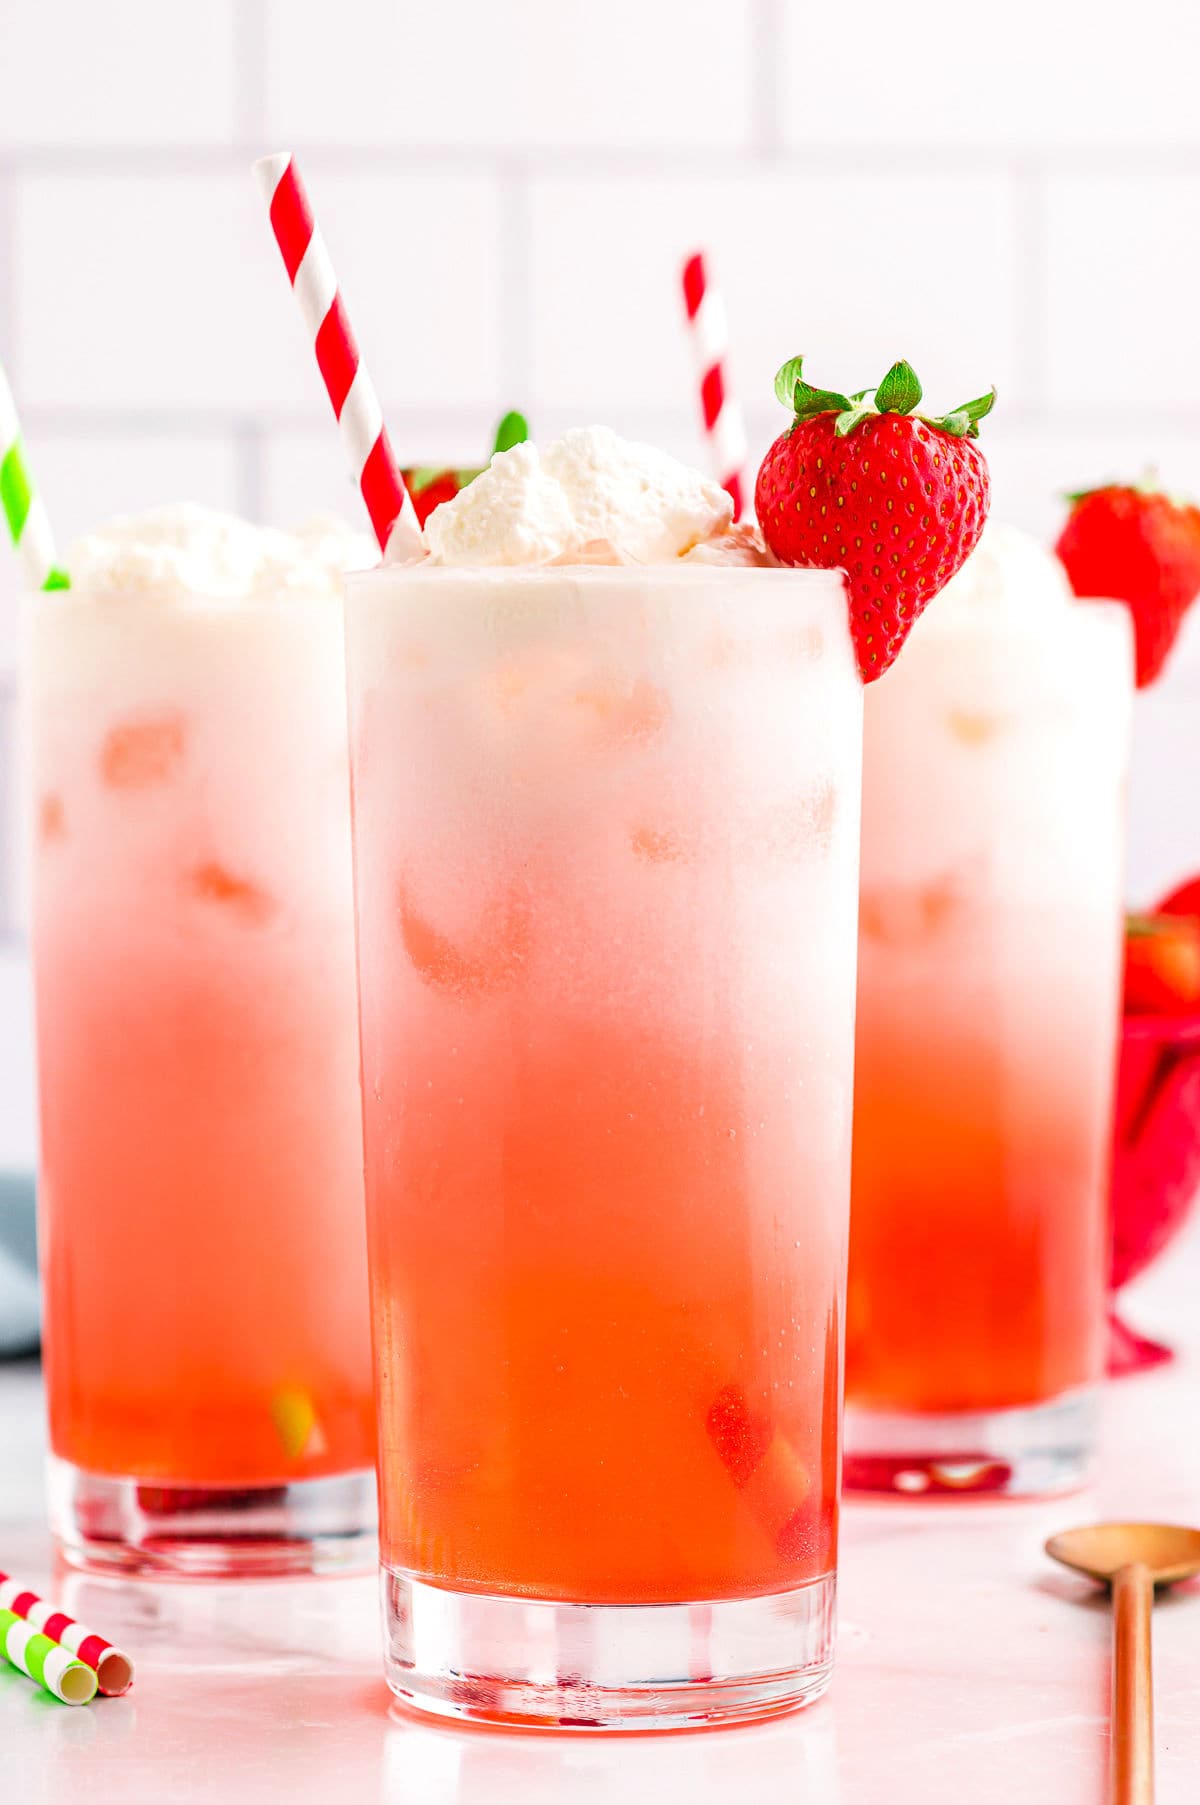 strawberry Italian cream sodas in tall beverage glass with paper straws.